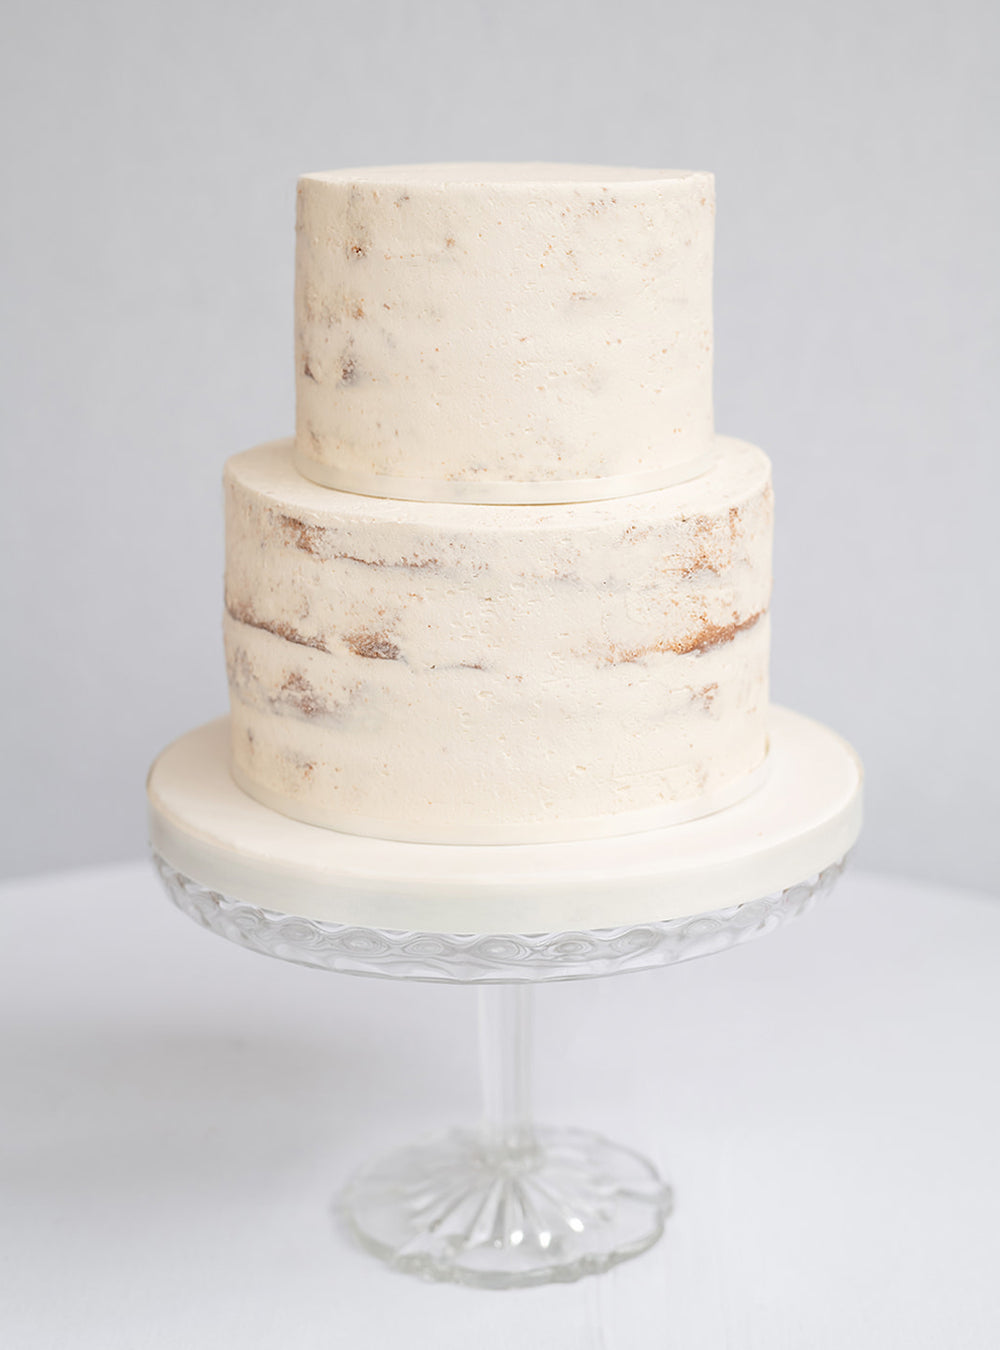 Pin on Wedding Cake - Inspiration